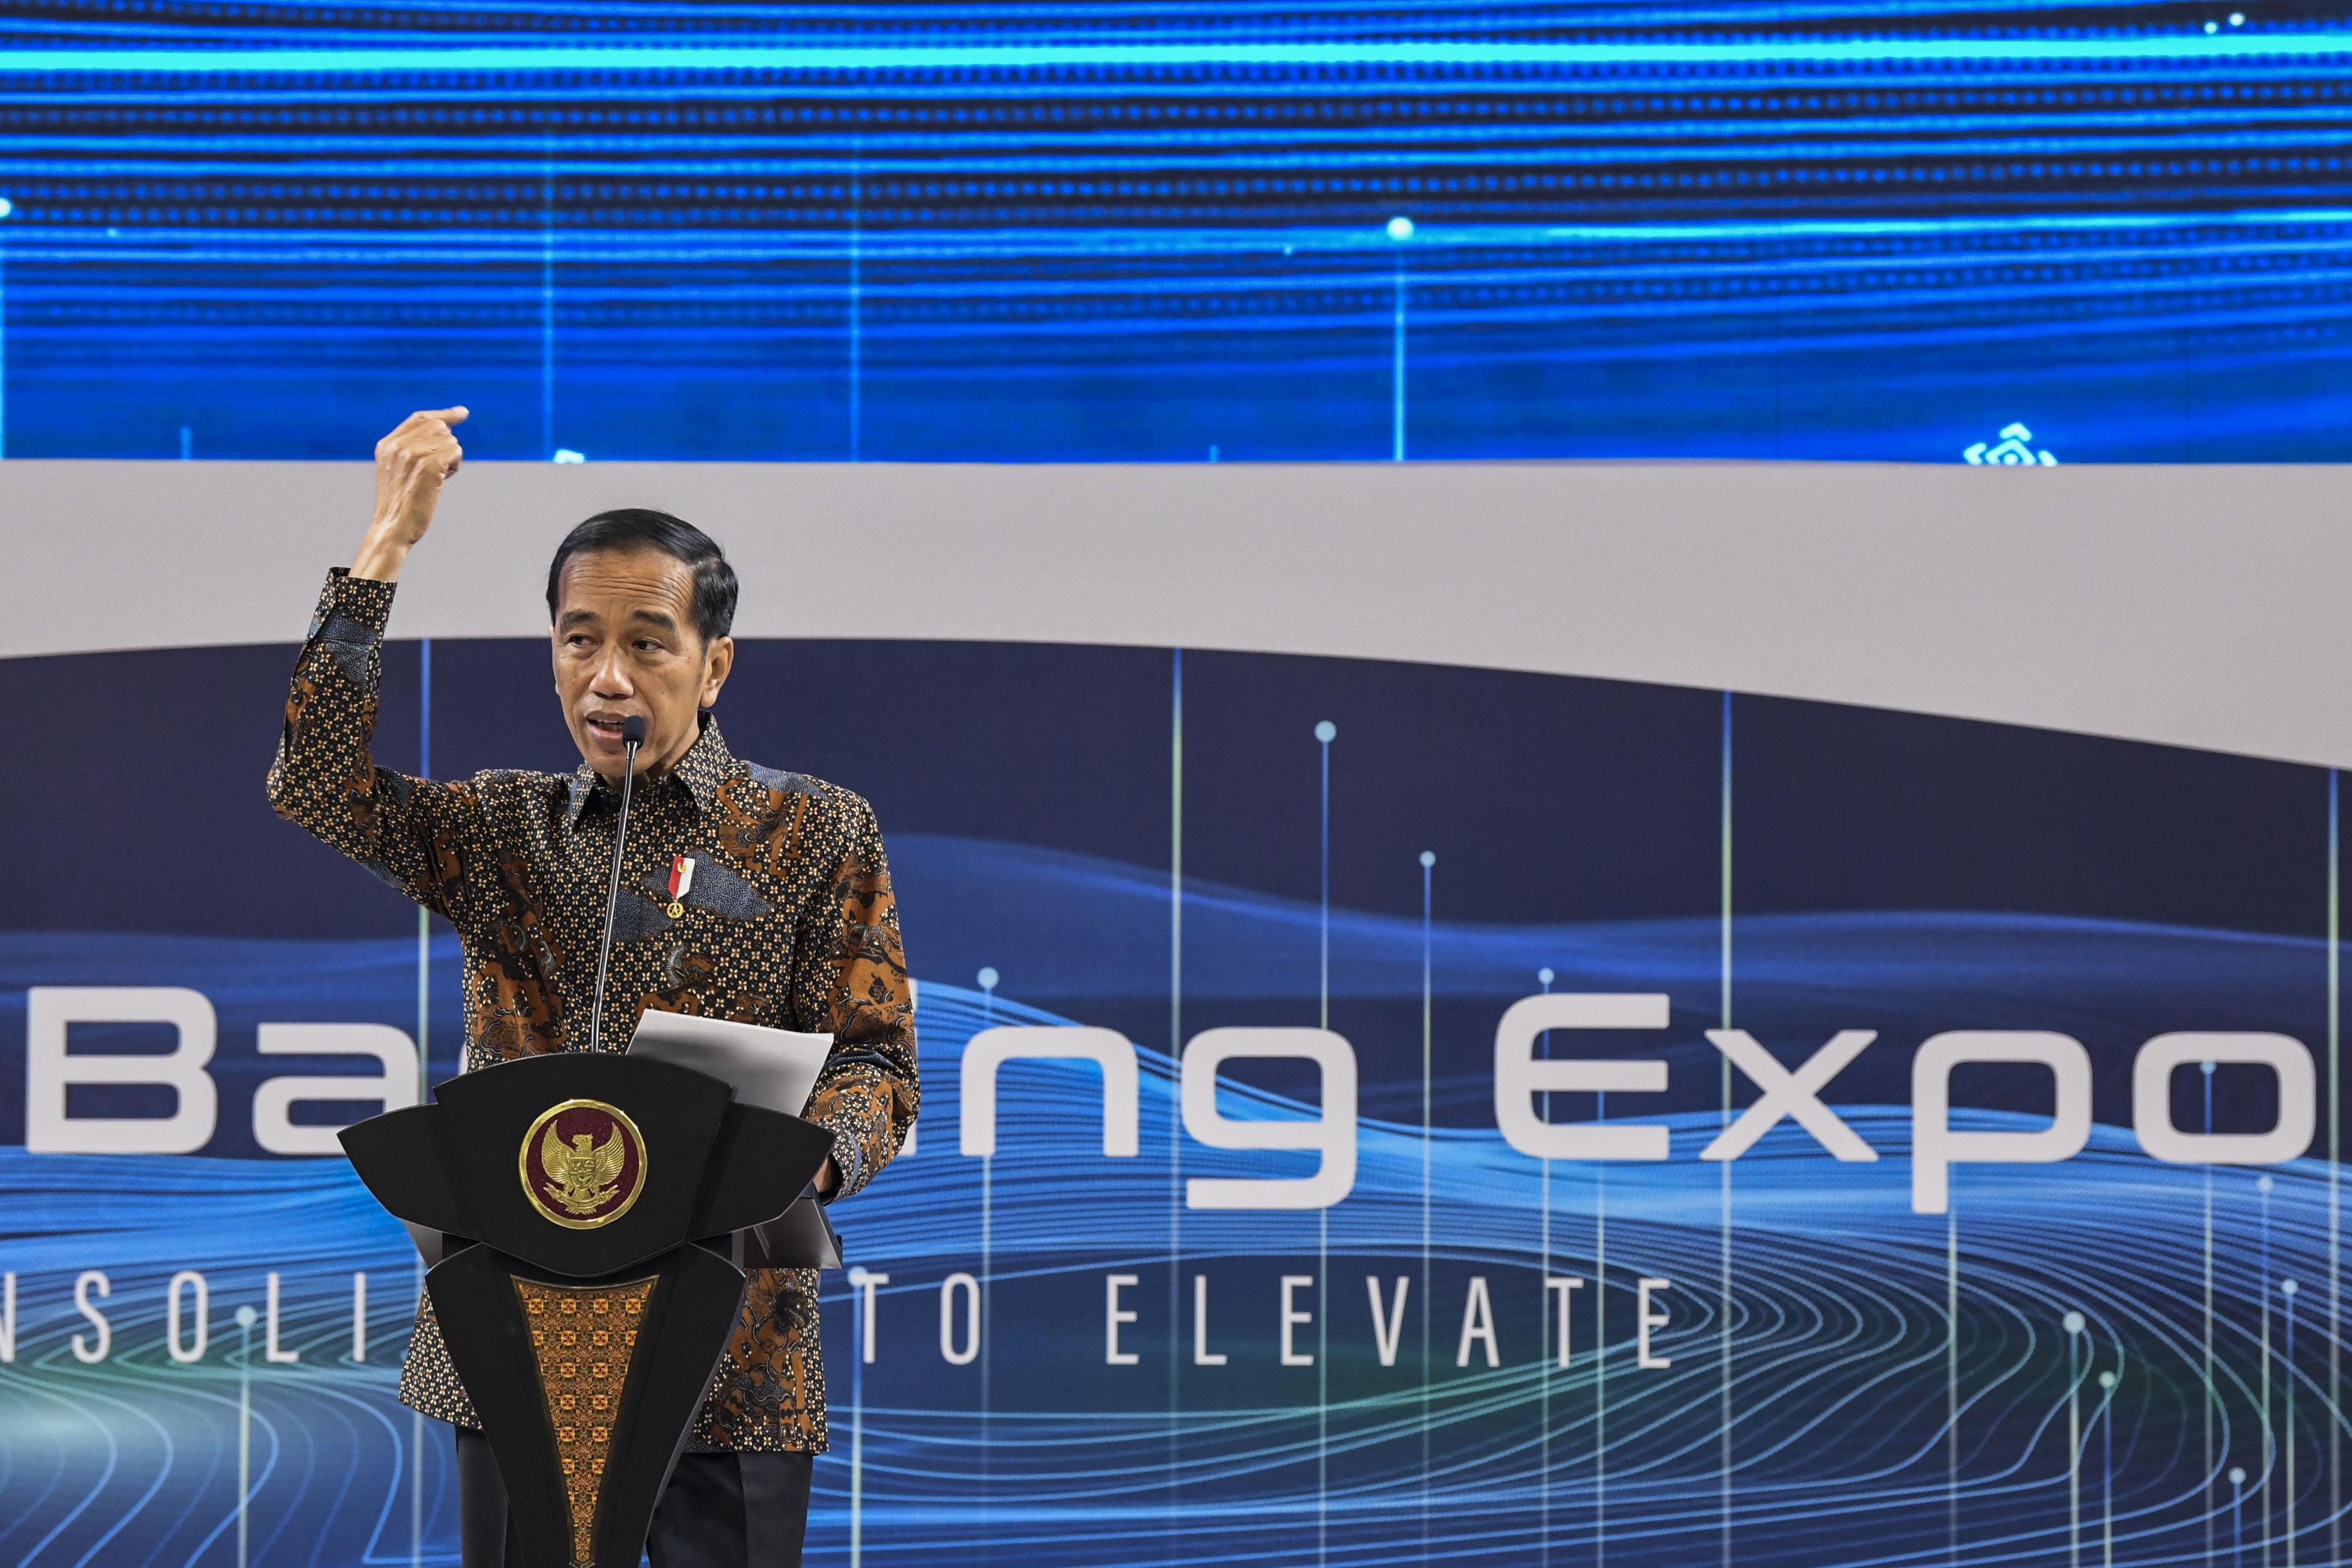 Berita Hari Ini : Jokowi Minta Bunga Kredit Turun, Calon Dirut BMRI dan BBTN 